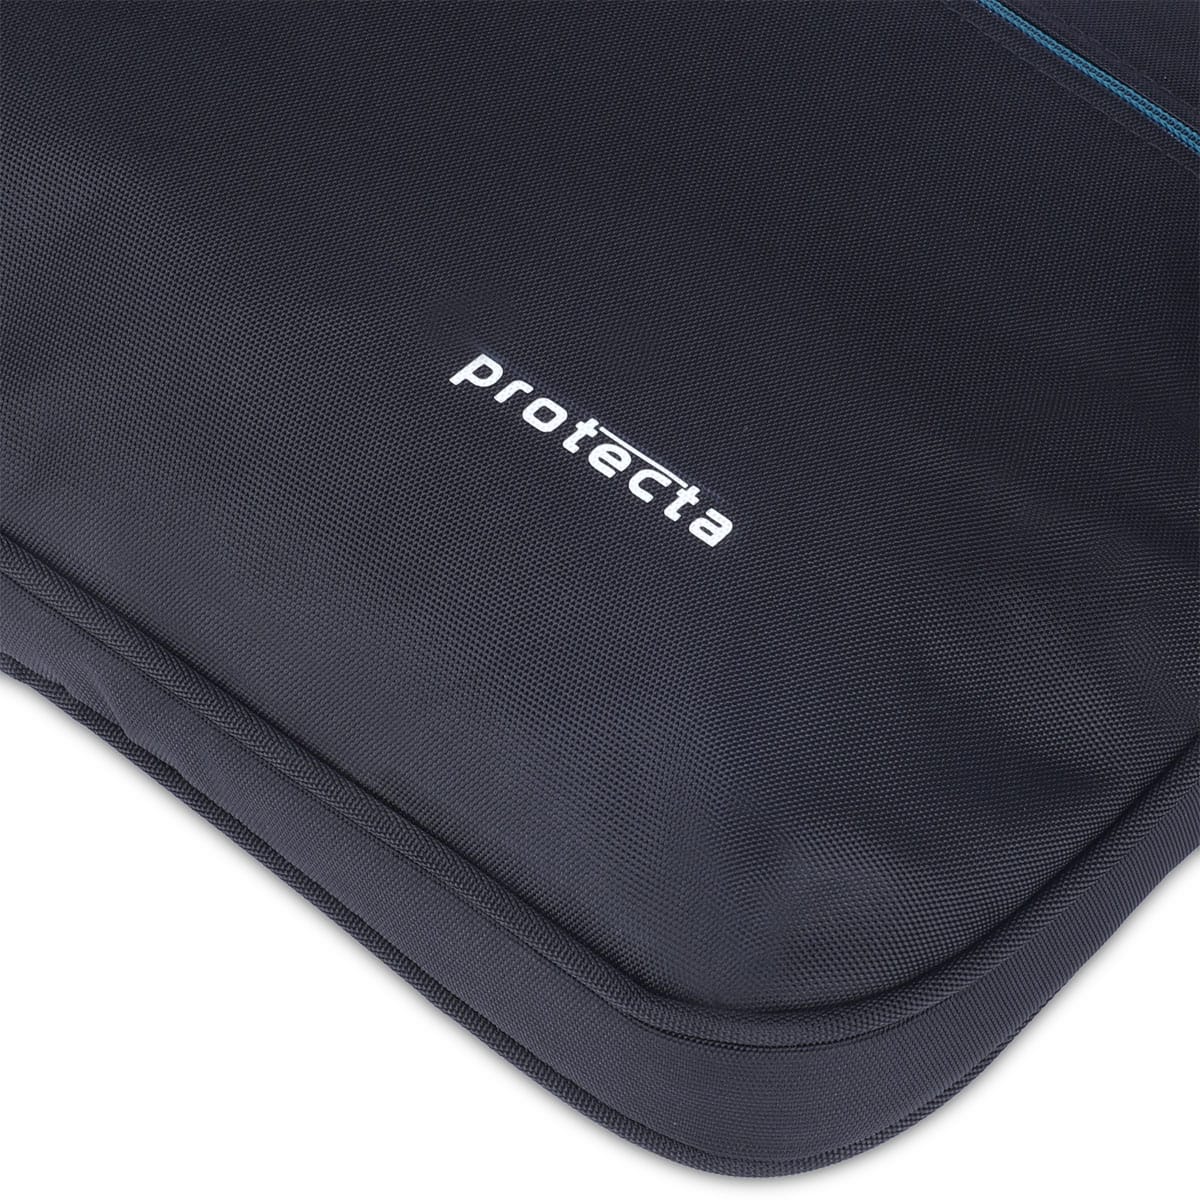 Black-Blue | Protecta Staunch Ally MacBook Sleeve-6